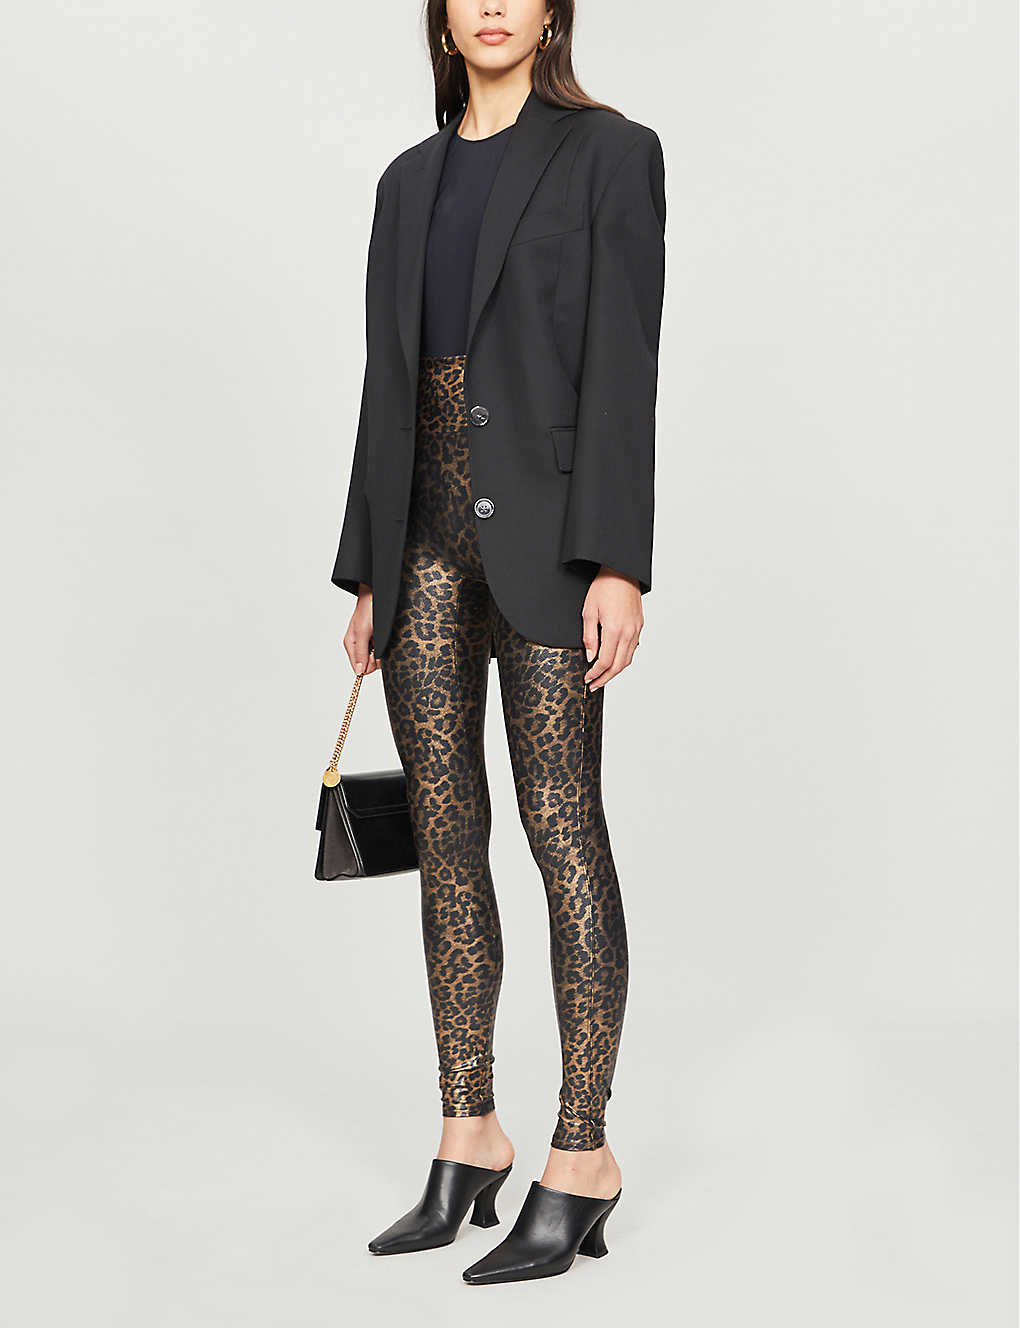 Spanx Faux Leather Leopard Leggings in Leopard Shine Size L - $30 - From  Nicole